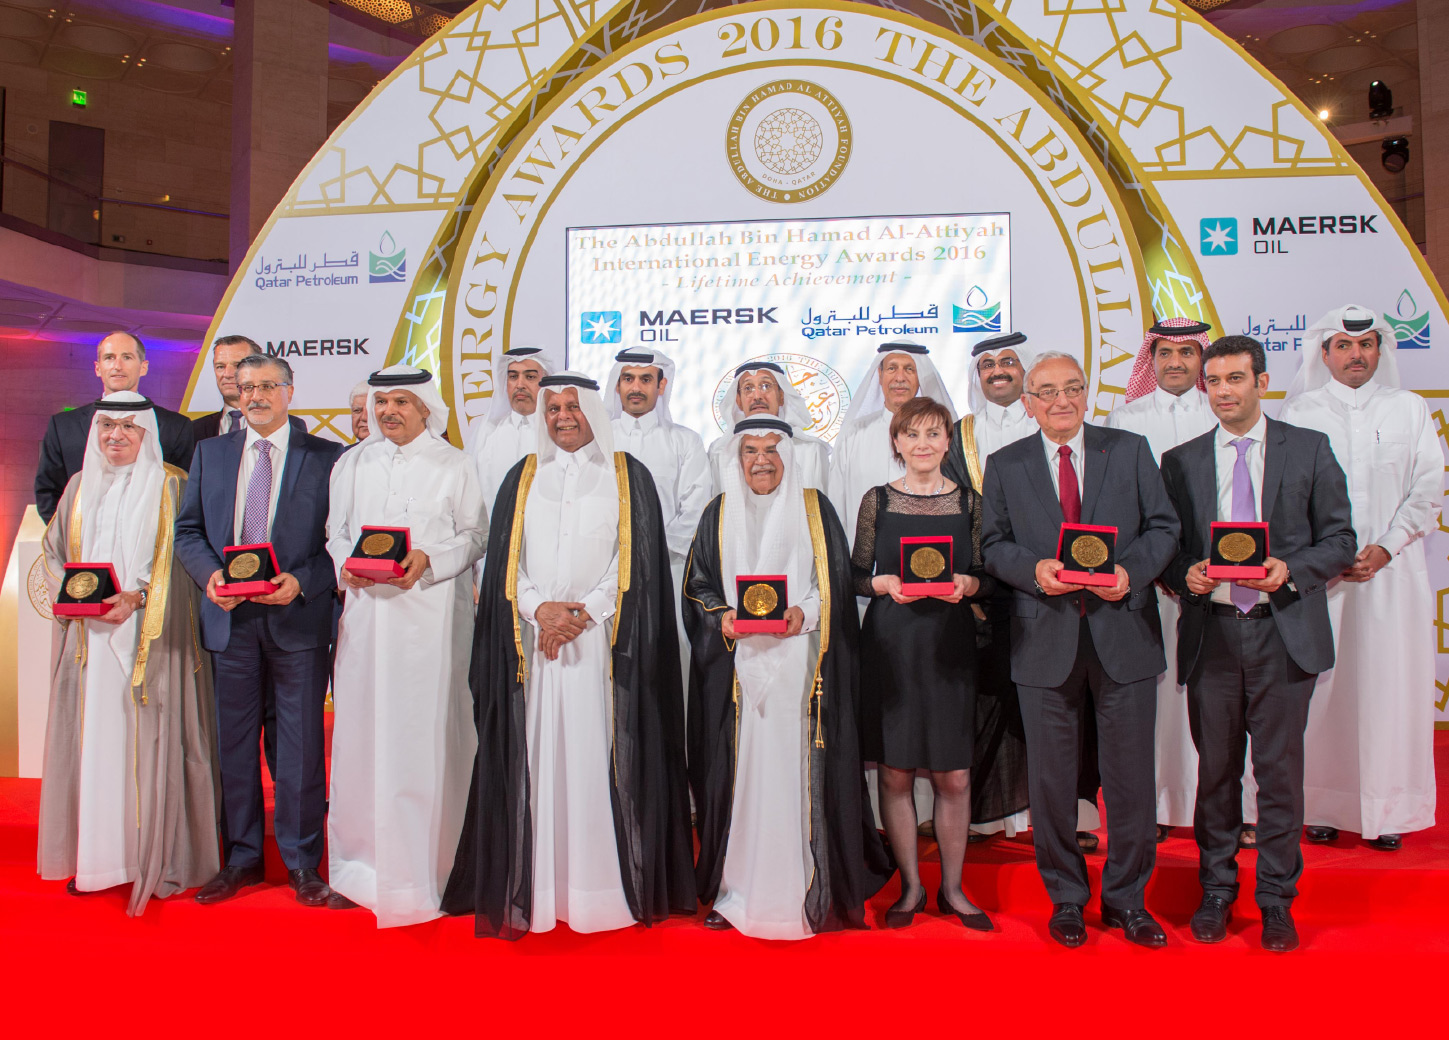 The 2016 Abdullah Bin Hamad Al-Attiyah International Energy Awards